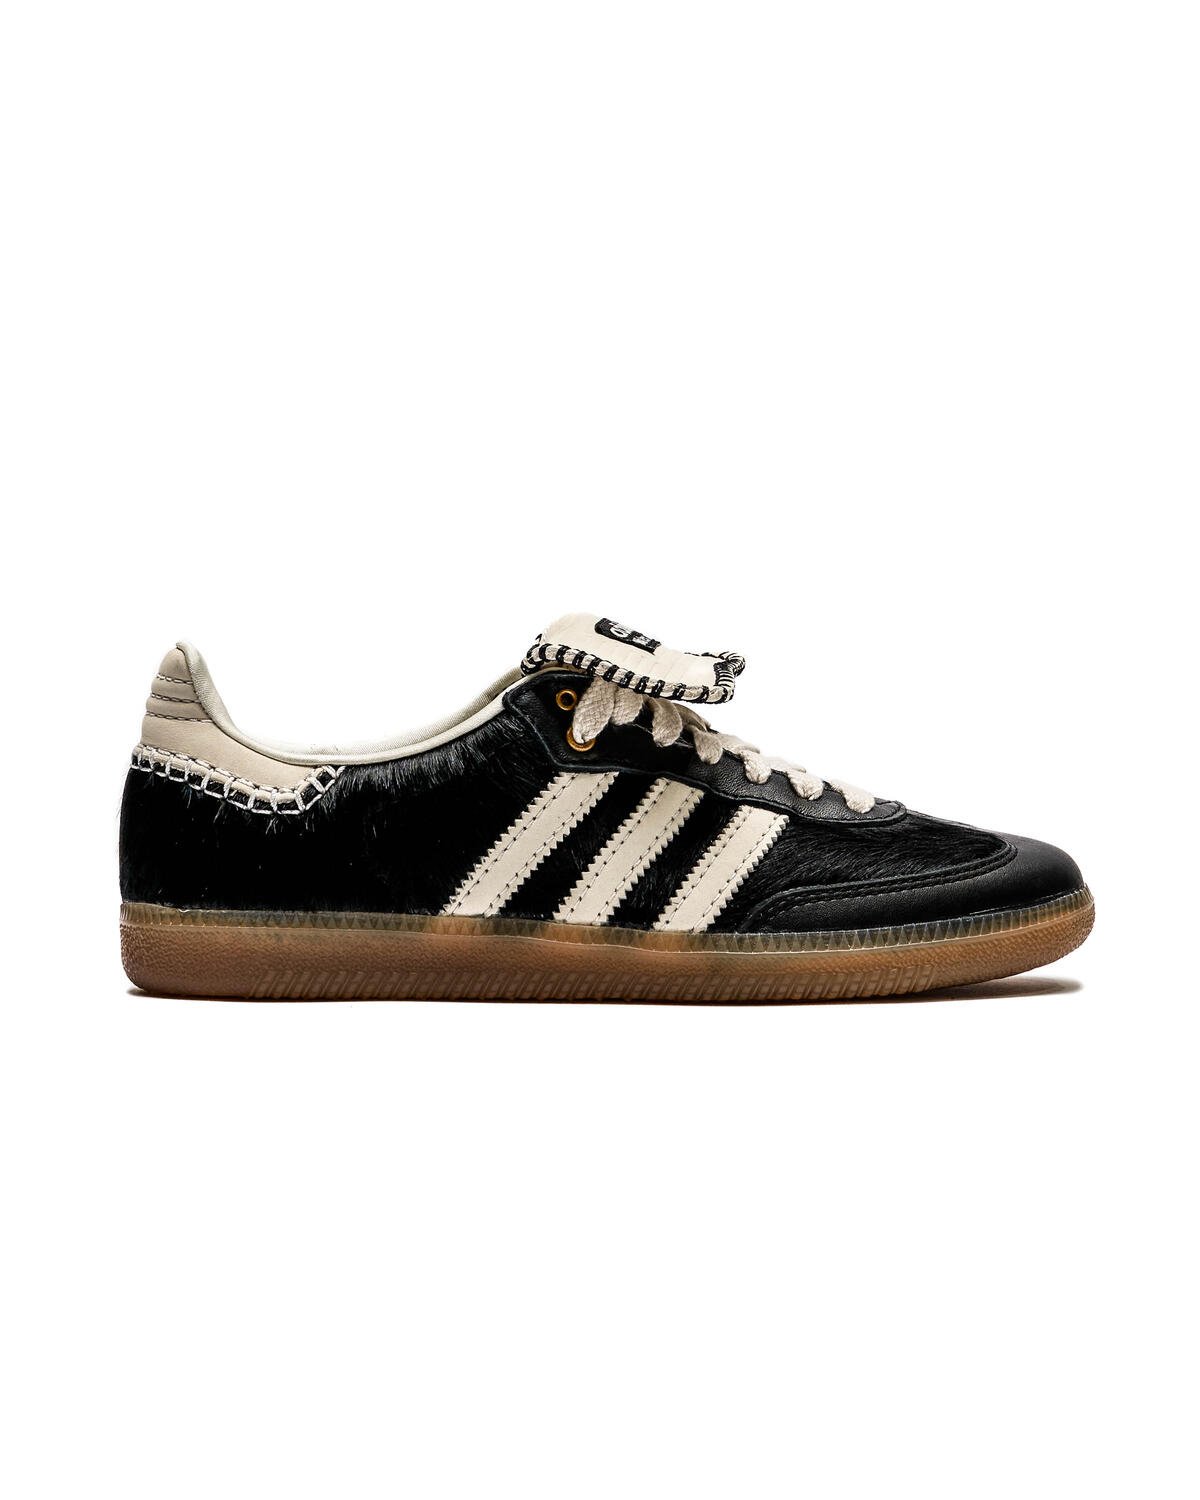 Adidas originals x Wales Bonner PONY TONAL SAMBA | IE0580 | AFEW STORE